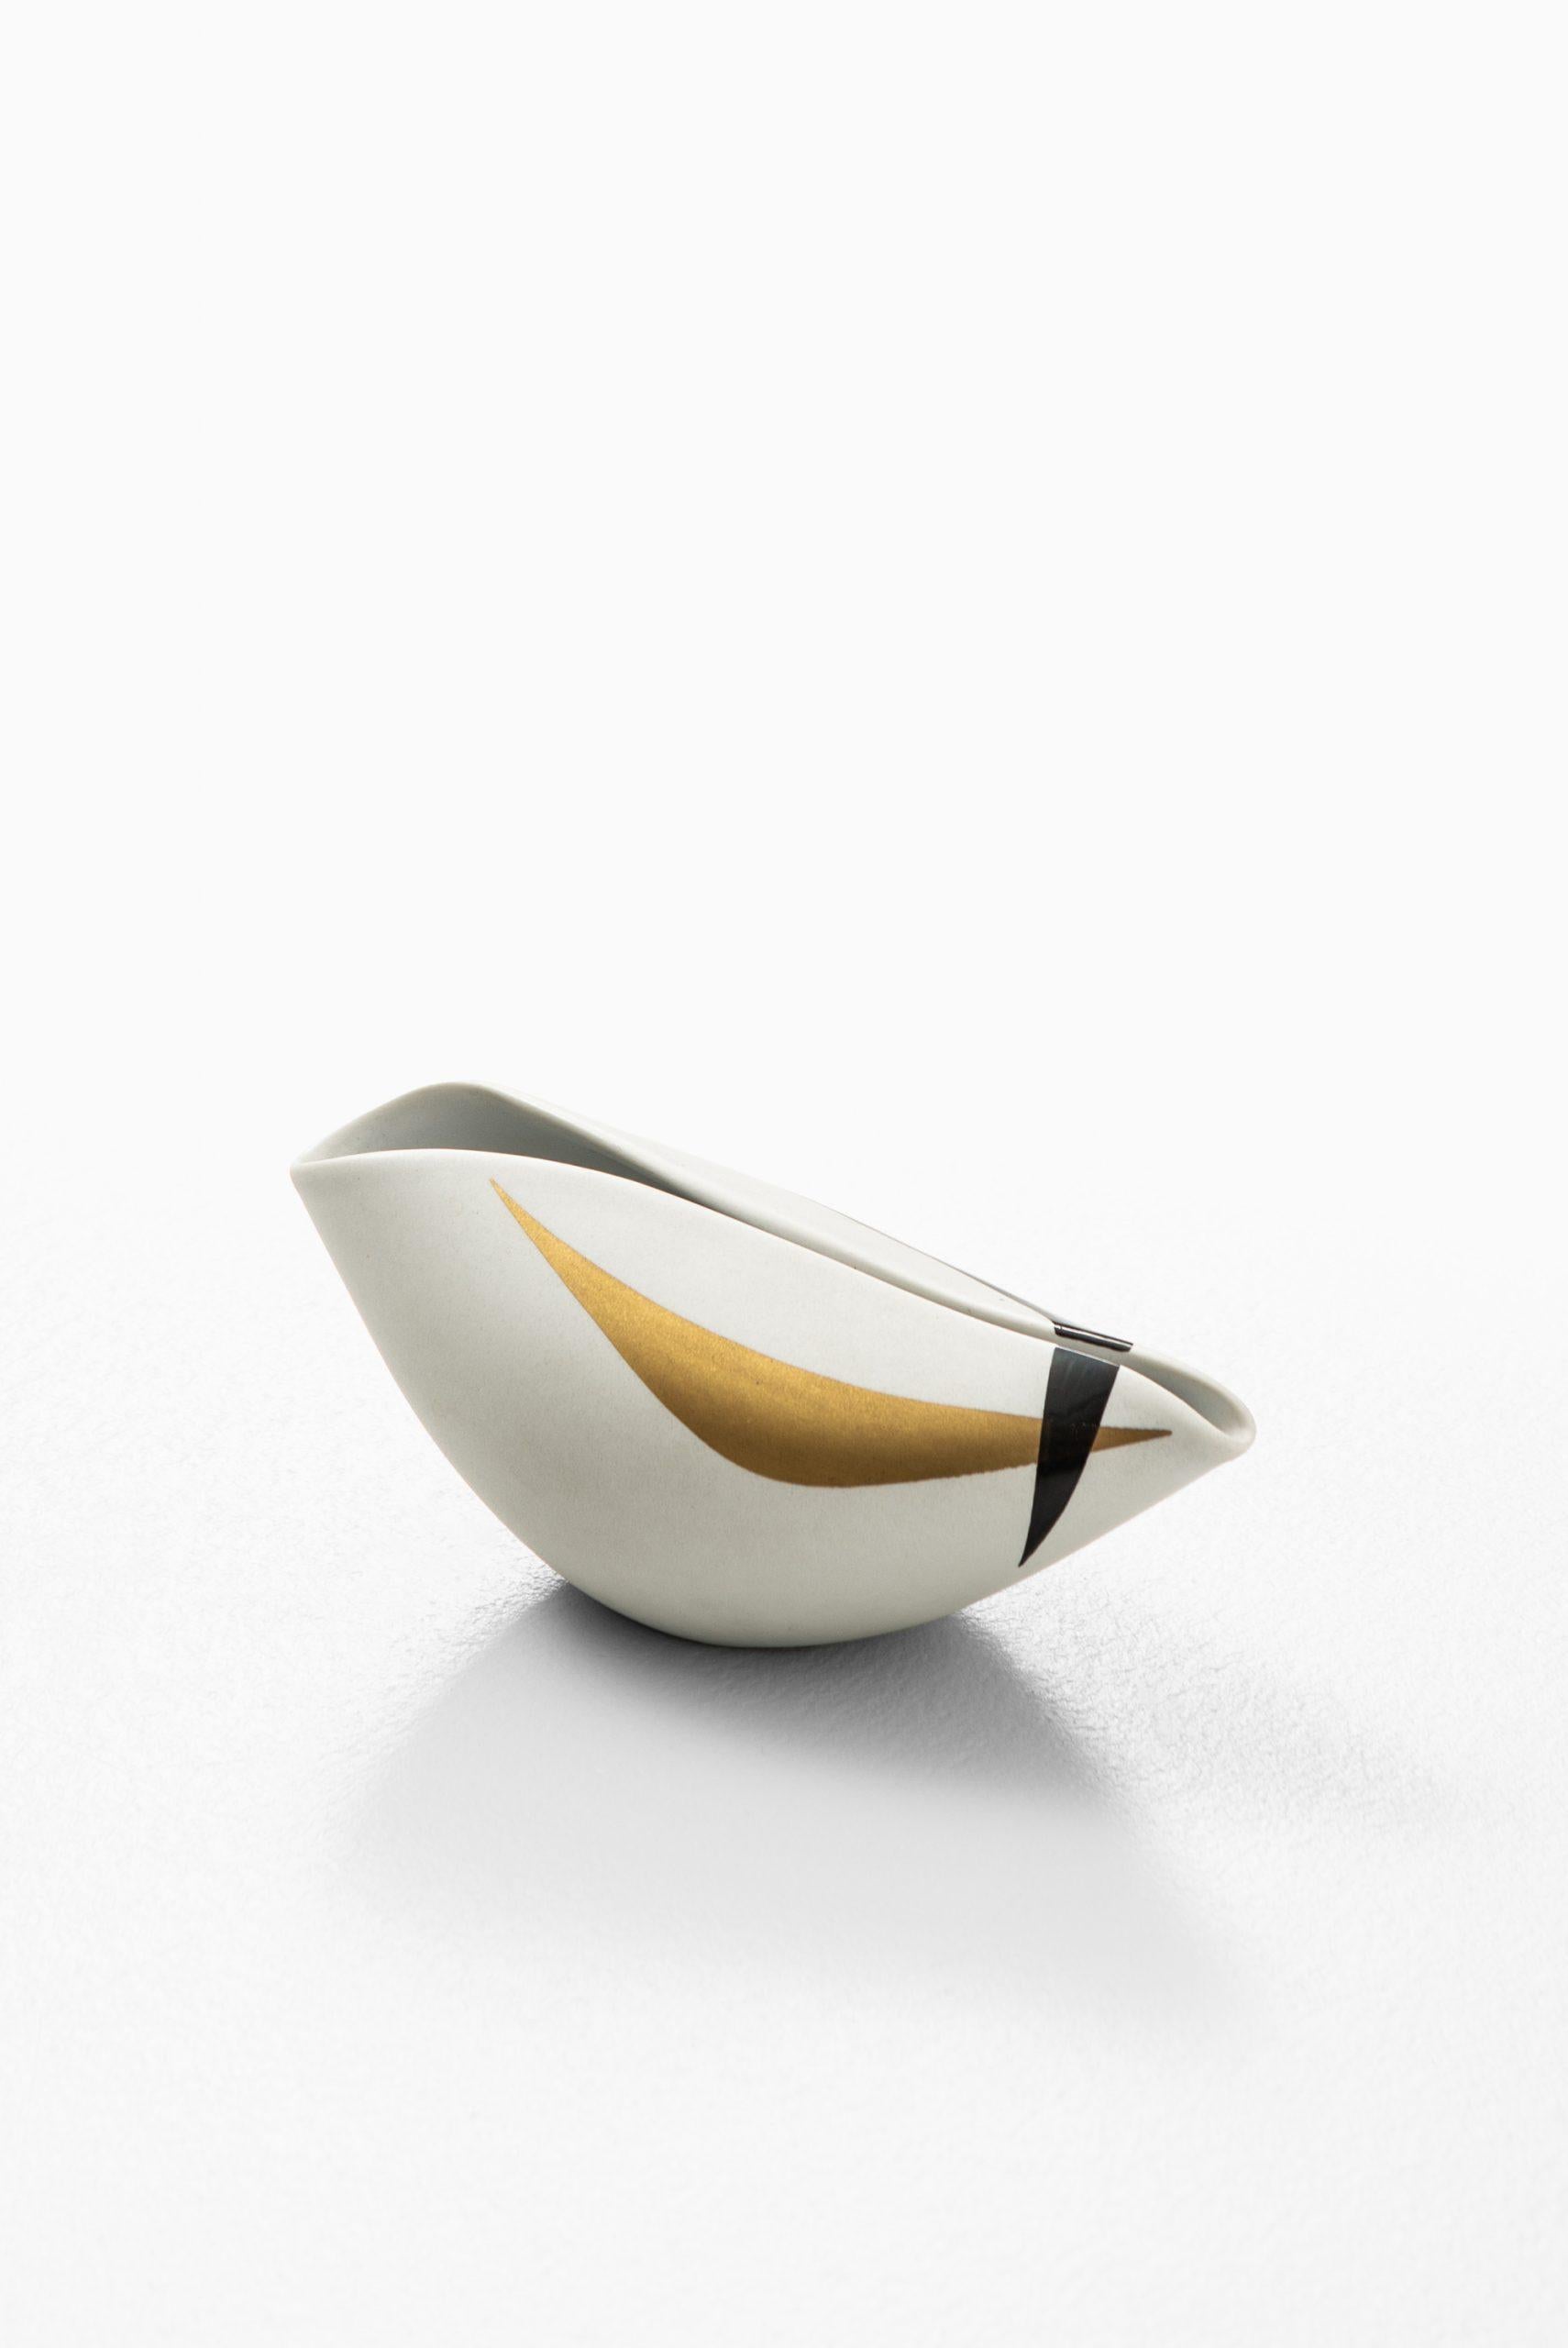 Ceramic vase model Veckla designed by Stig Lindberg. Produced by Gustavsberg in Sweden.